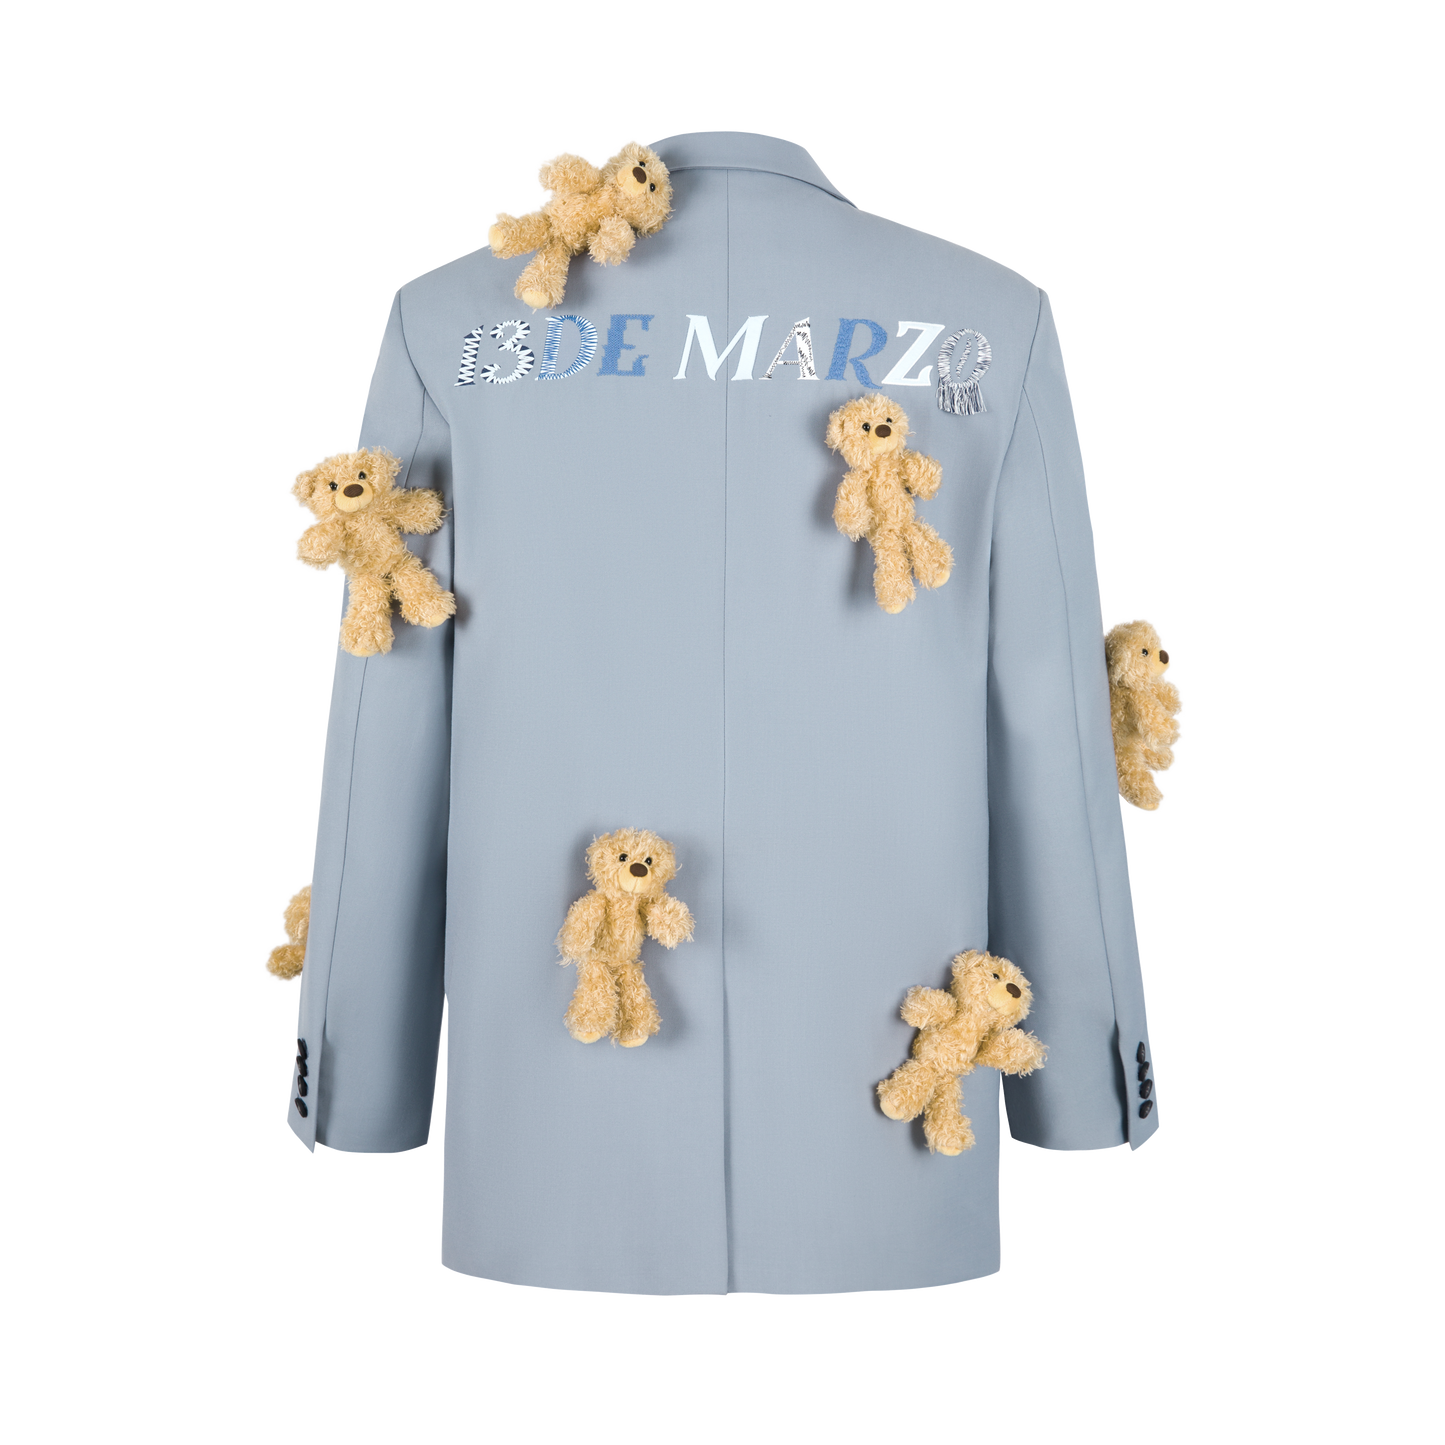 13DE MARZO Mini Bear Covered Suit